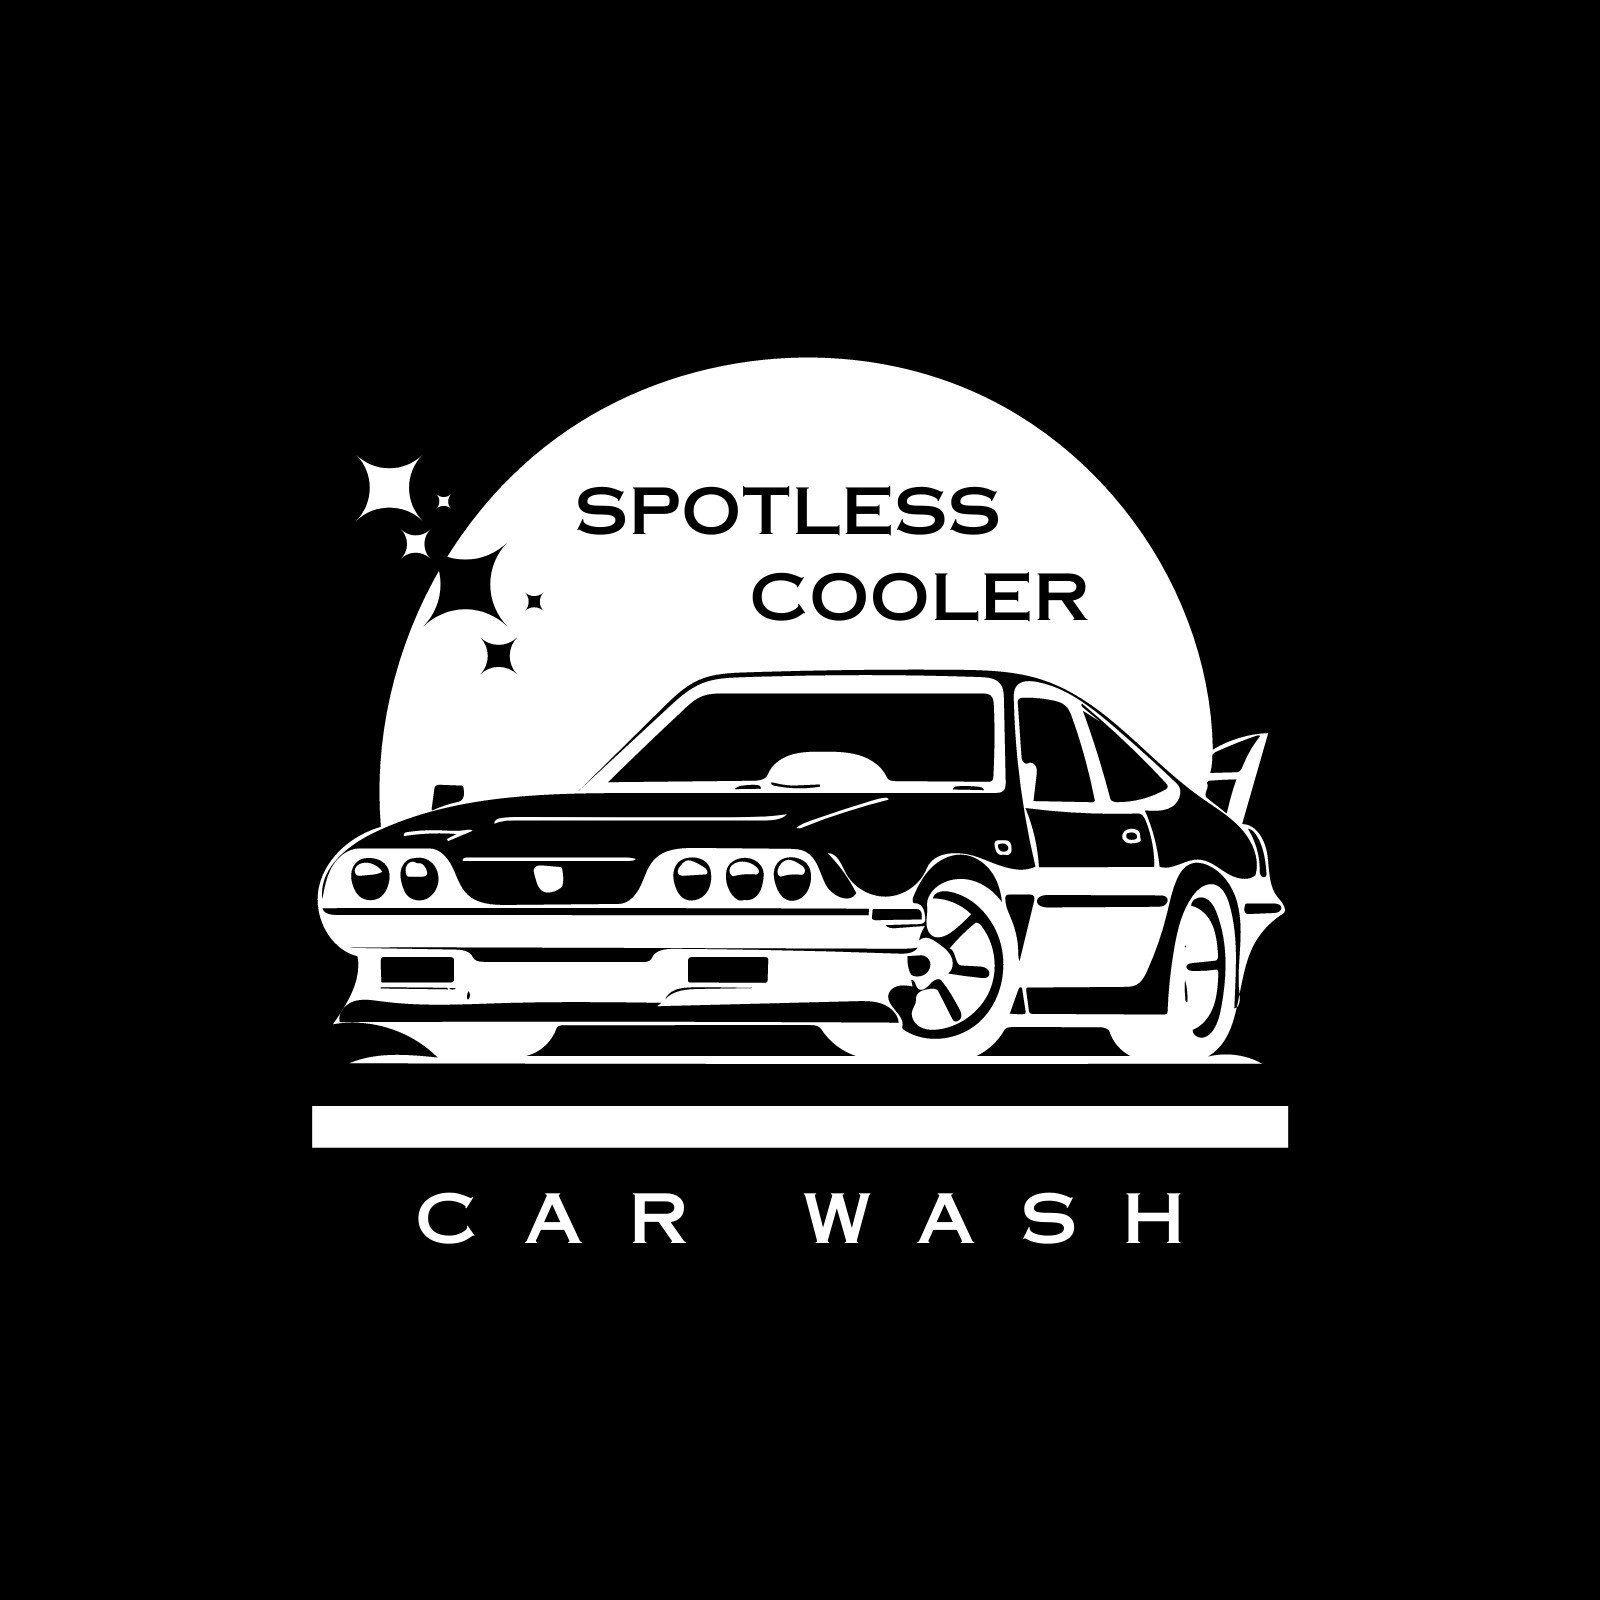 Black and White Flat Illustrated Car Wash Service Logo